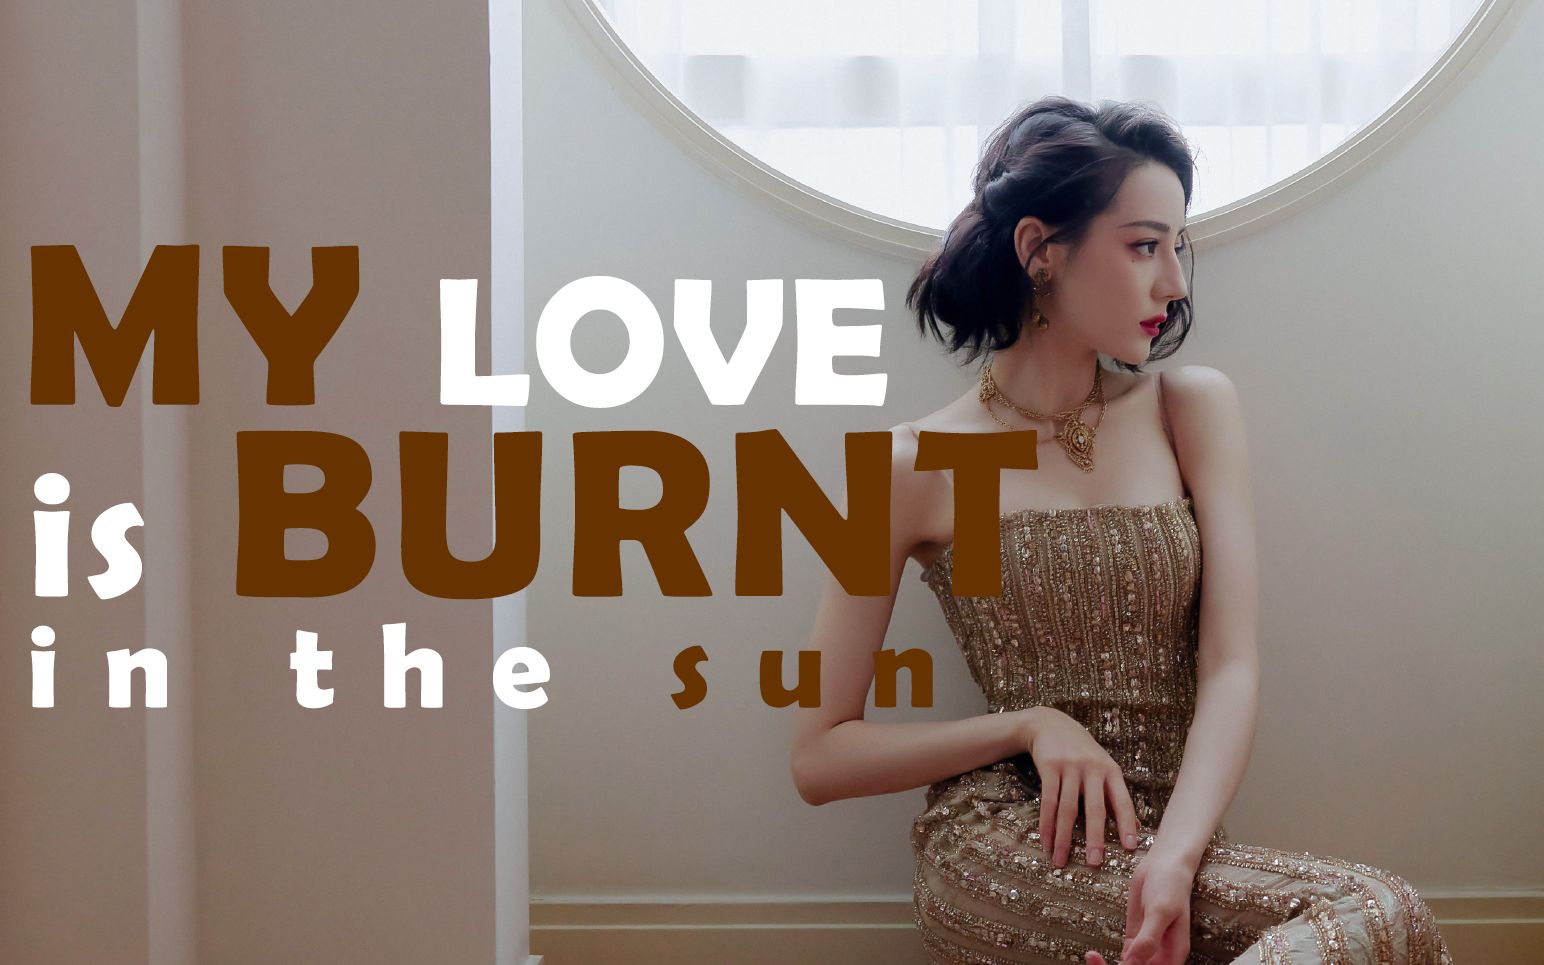 [图]【迪丽热巴】My love is burnt in the sun